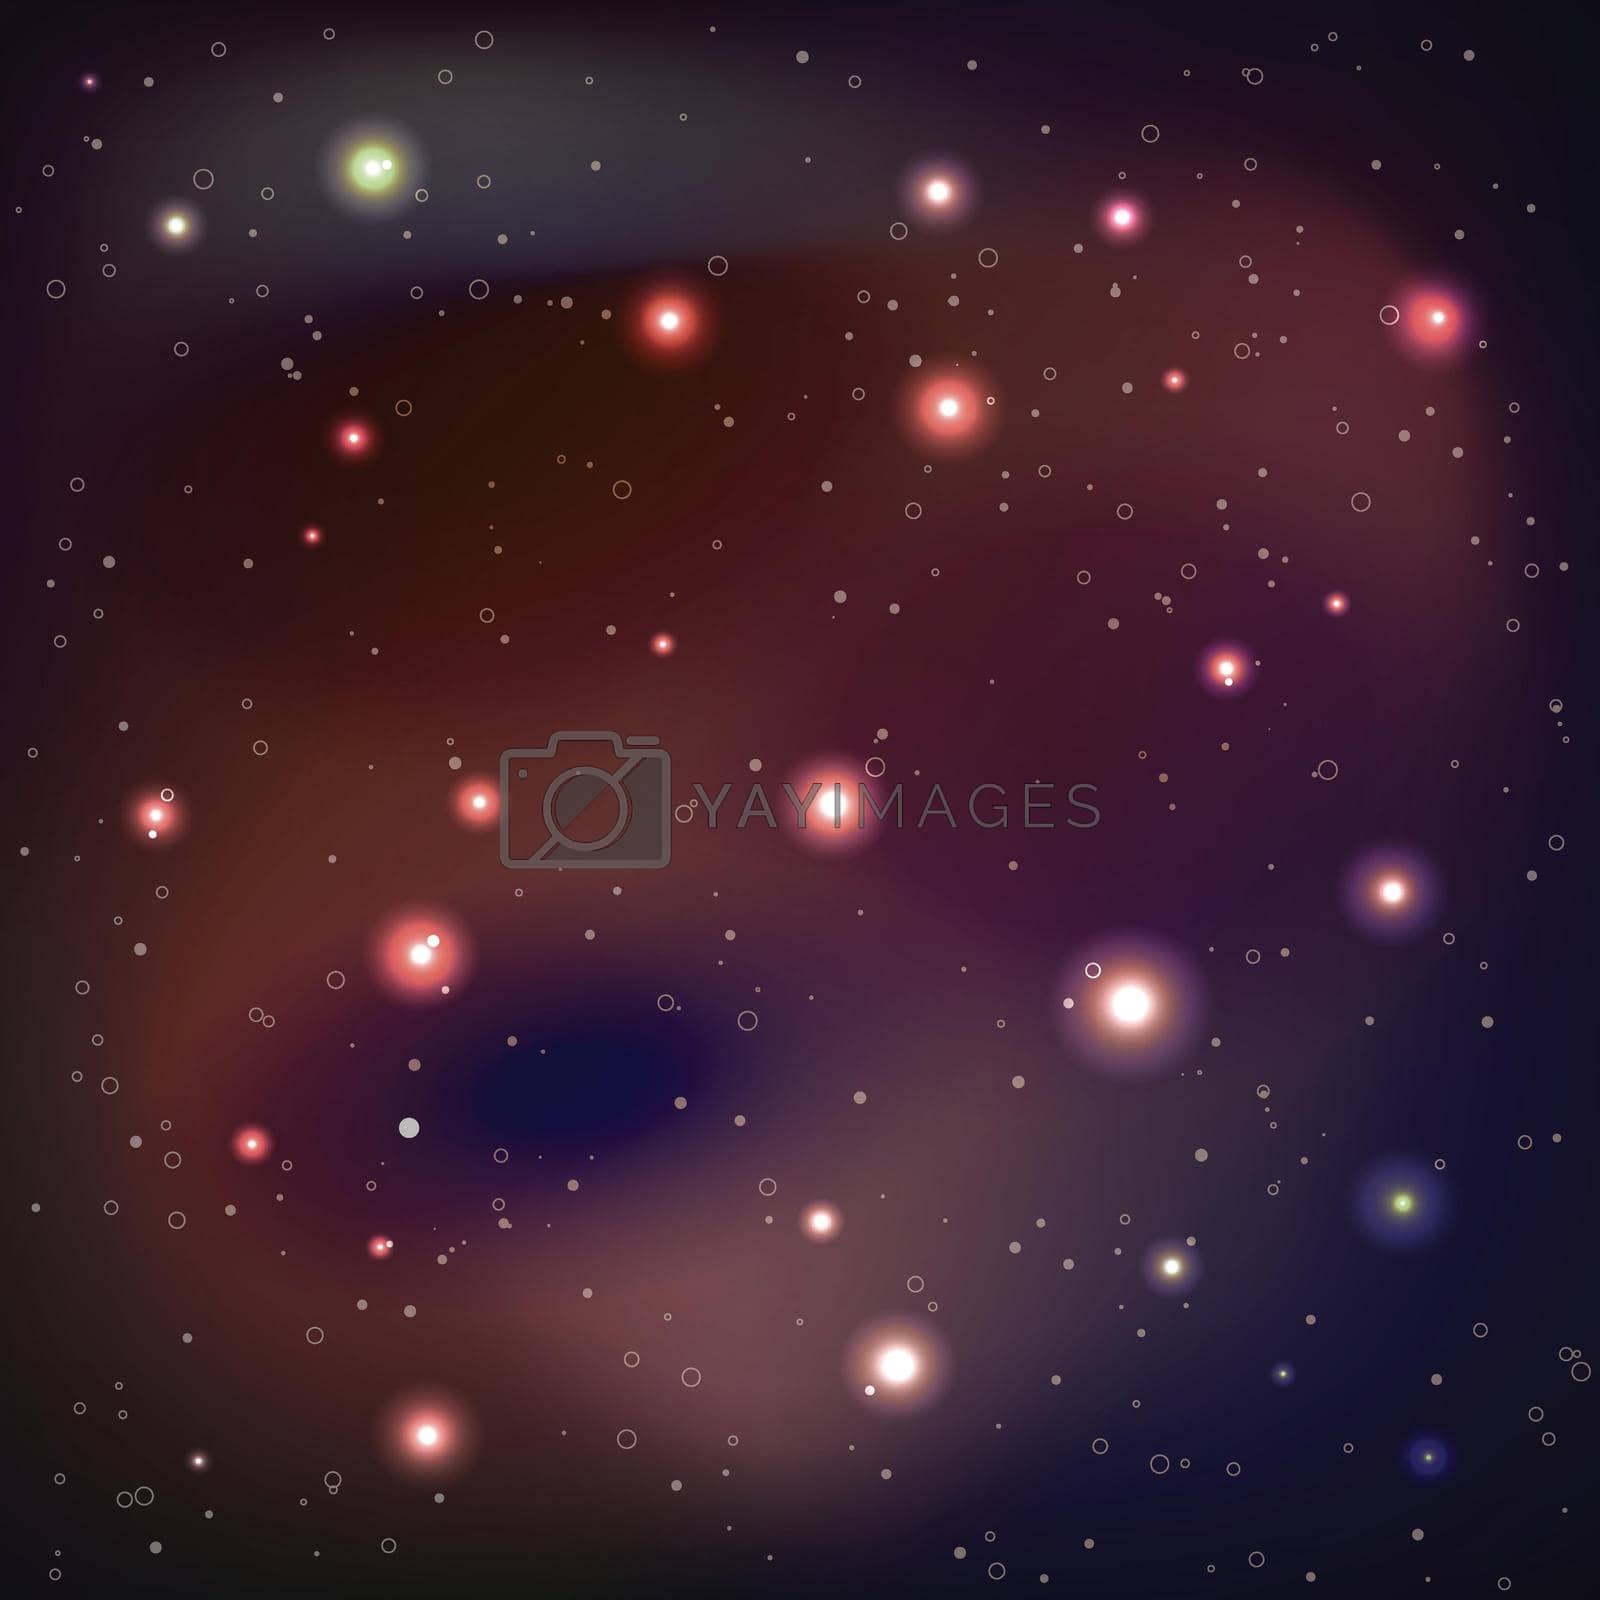 Royalty free image of Galaxy background - vector illustration by balabolka